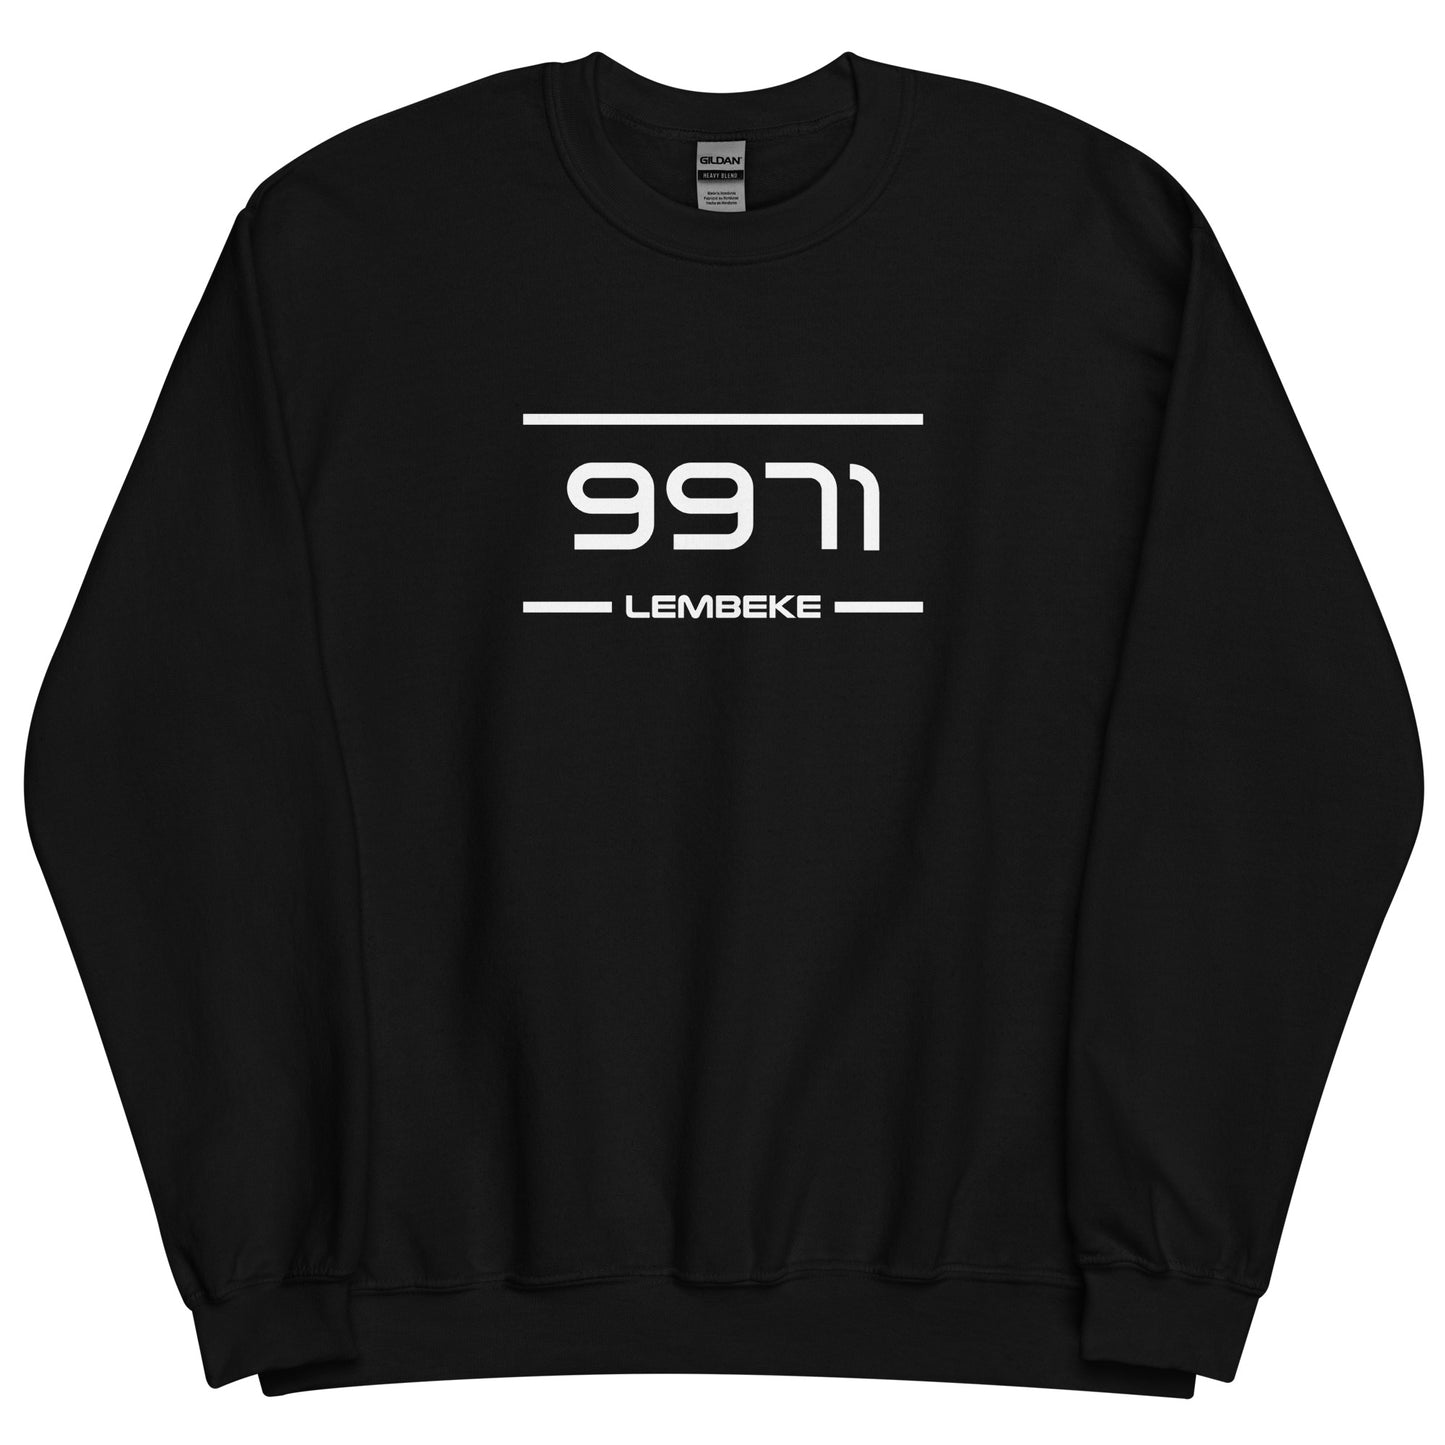 Sweater - 9971 - Lembeke (M/V)